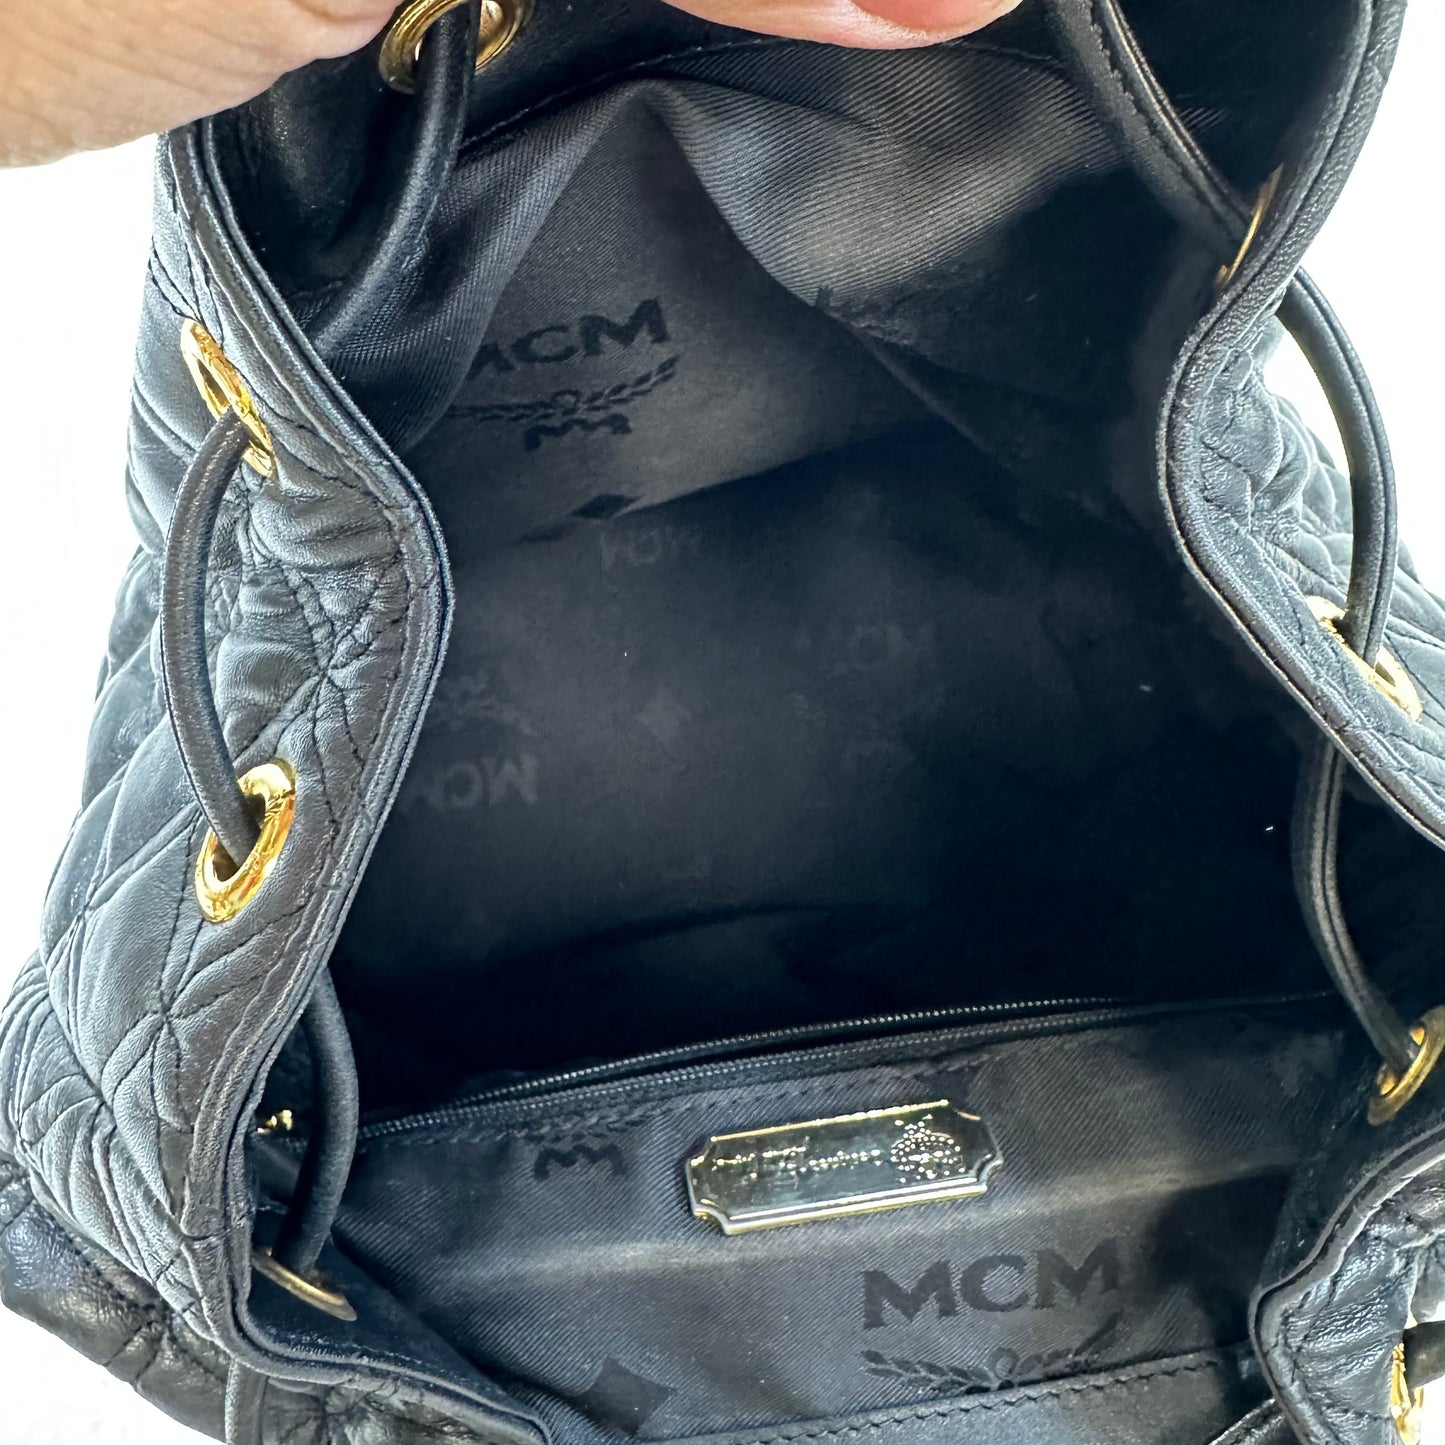 Backpack Designer Mcm, Size Small